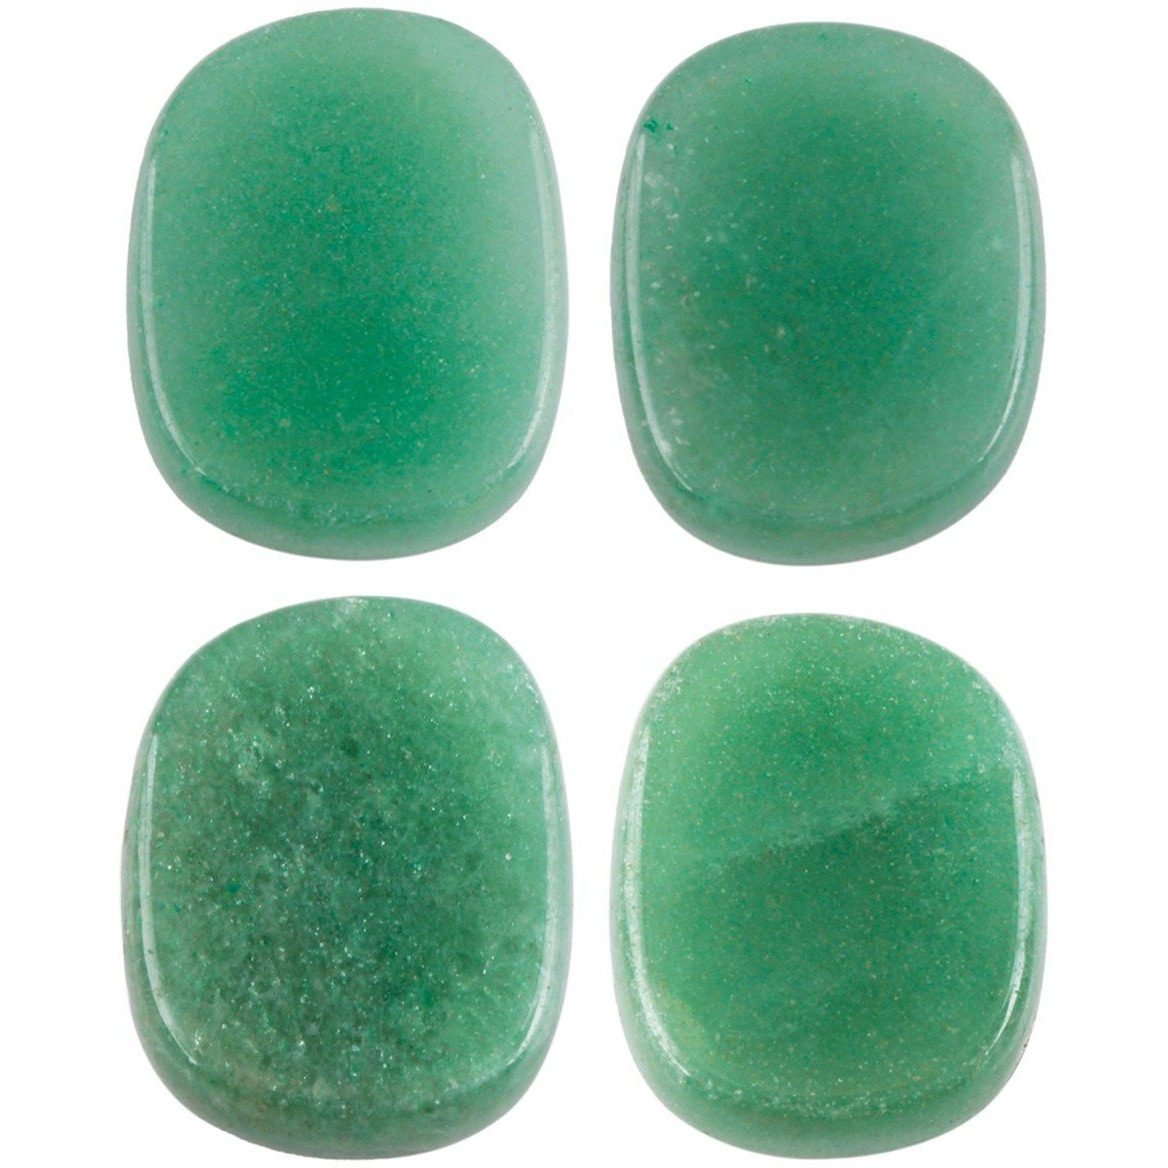 Winmaarc Healing Crystal Green Adventurine 4 pcs Engraved Chakra Stones Palm Stone Reiki Balancing